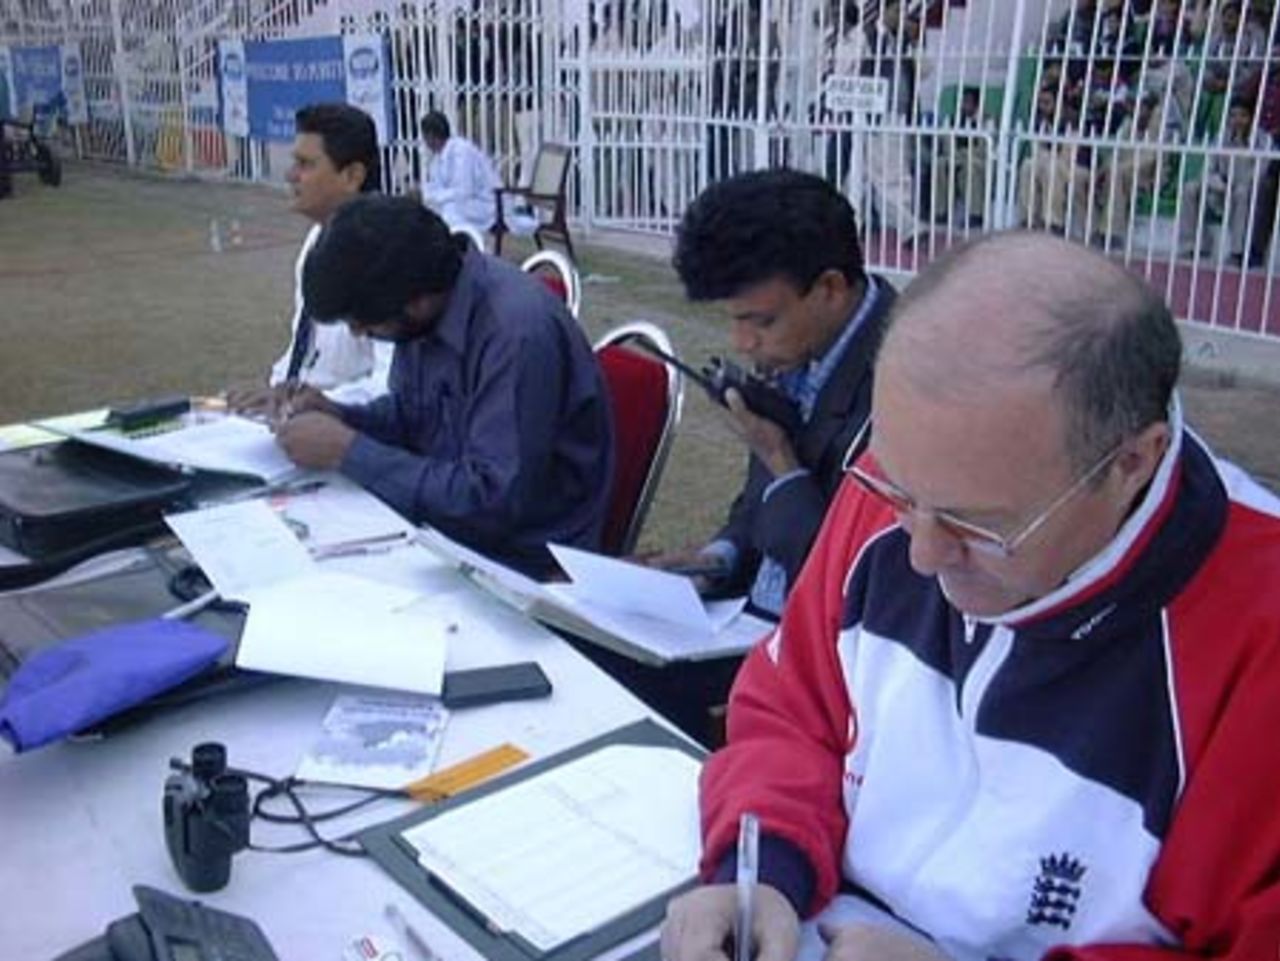 The busy scorers at Iqbal Stadium, Faisalabad, 2nd Test England v Pakistan, 29 Nov-3 Dec 2000